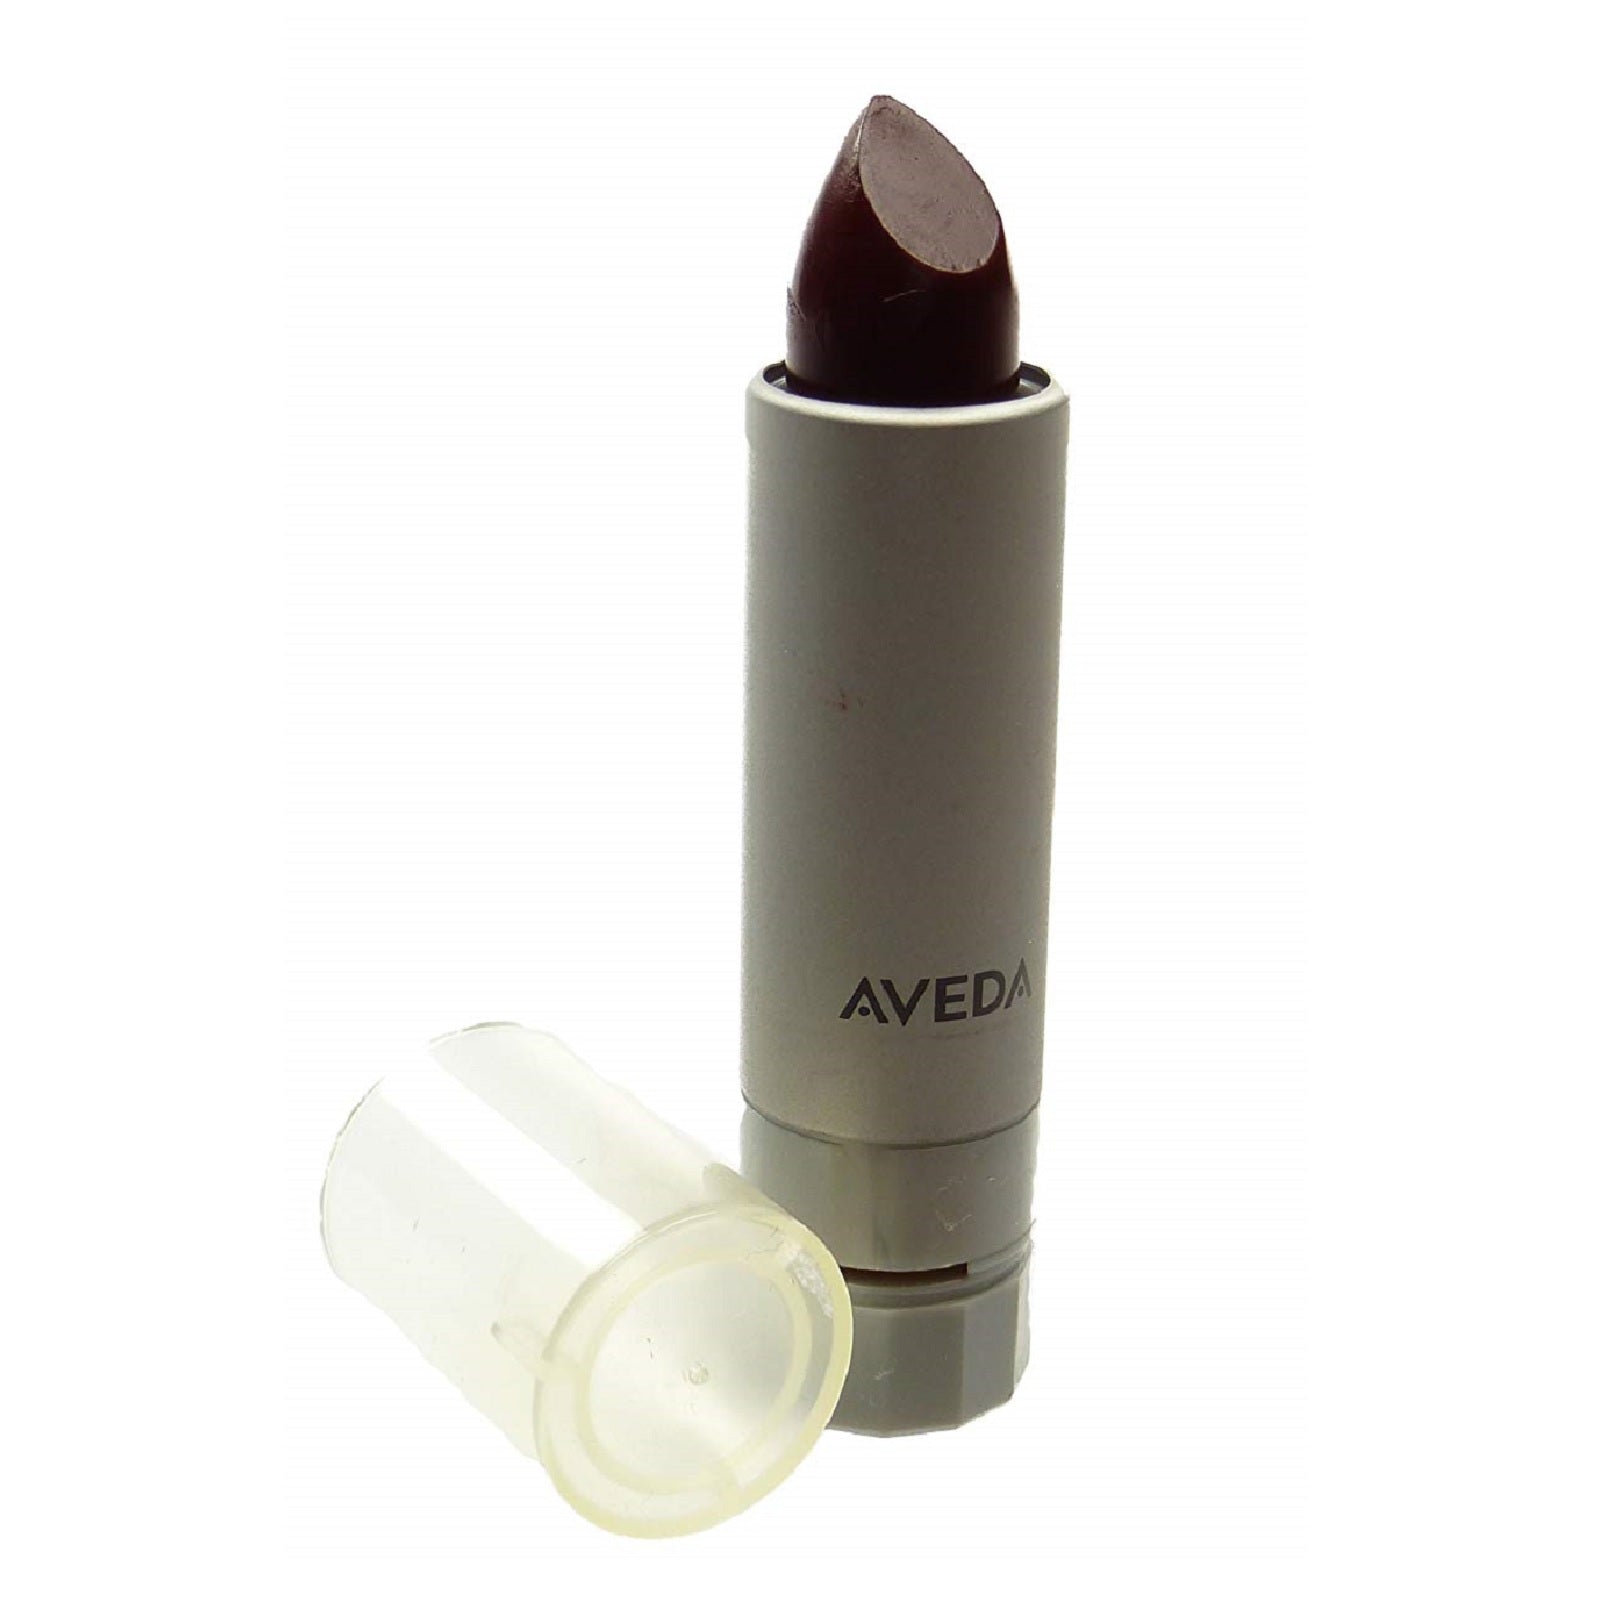 AVEDA new lipstick lip color Black Currant 633 Nourish-Mint discontinued